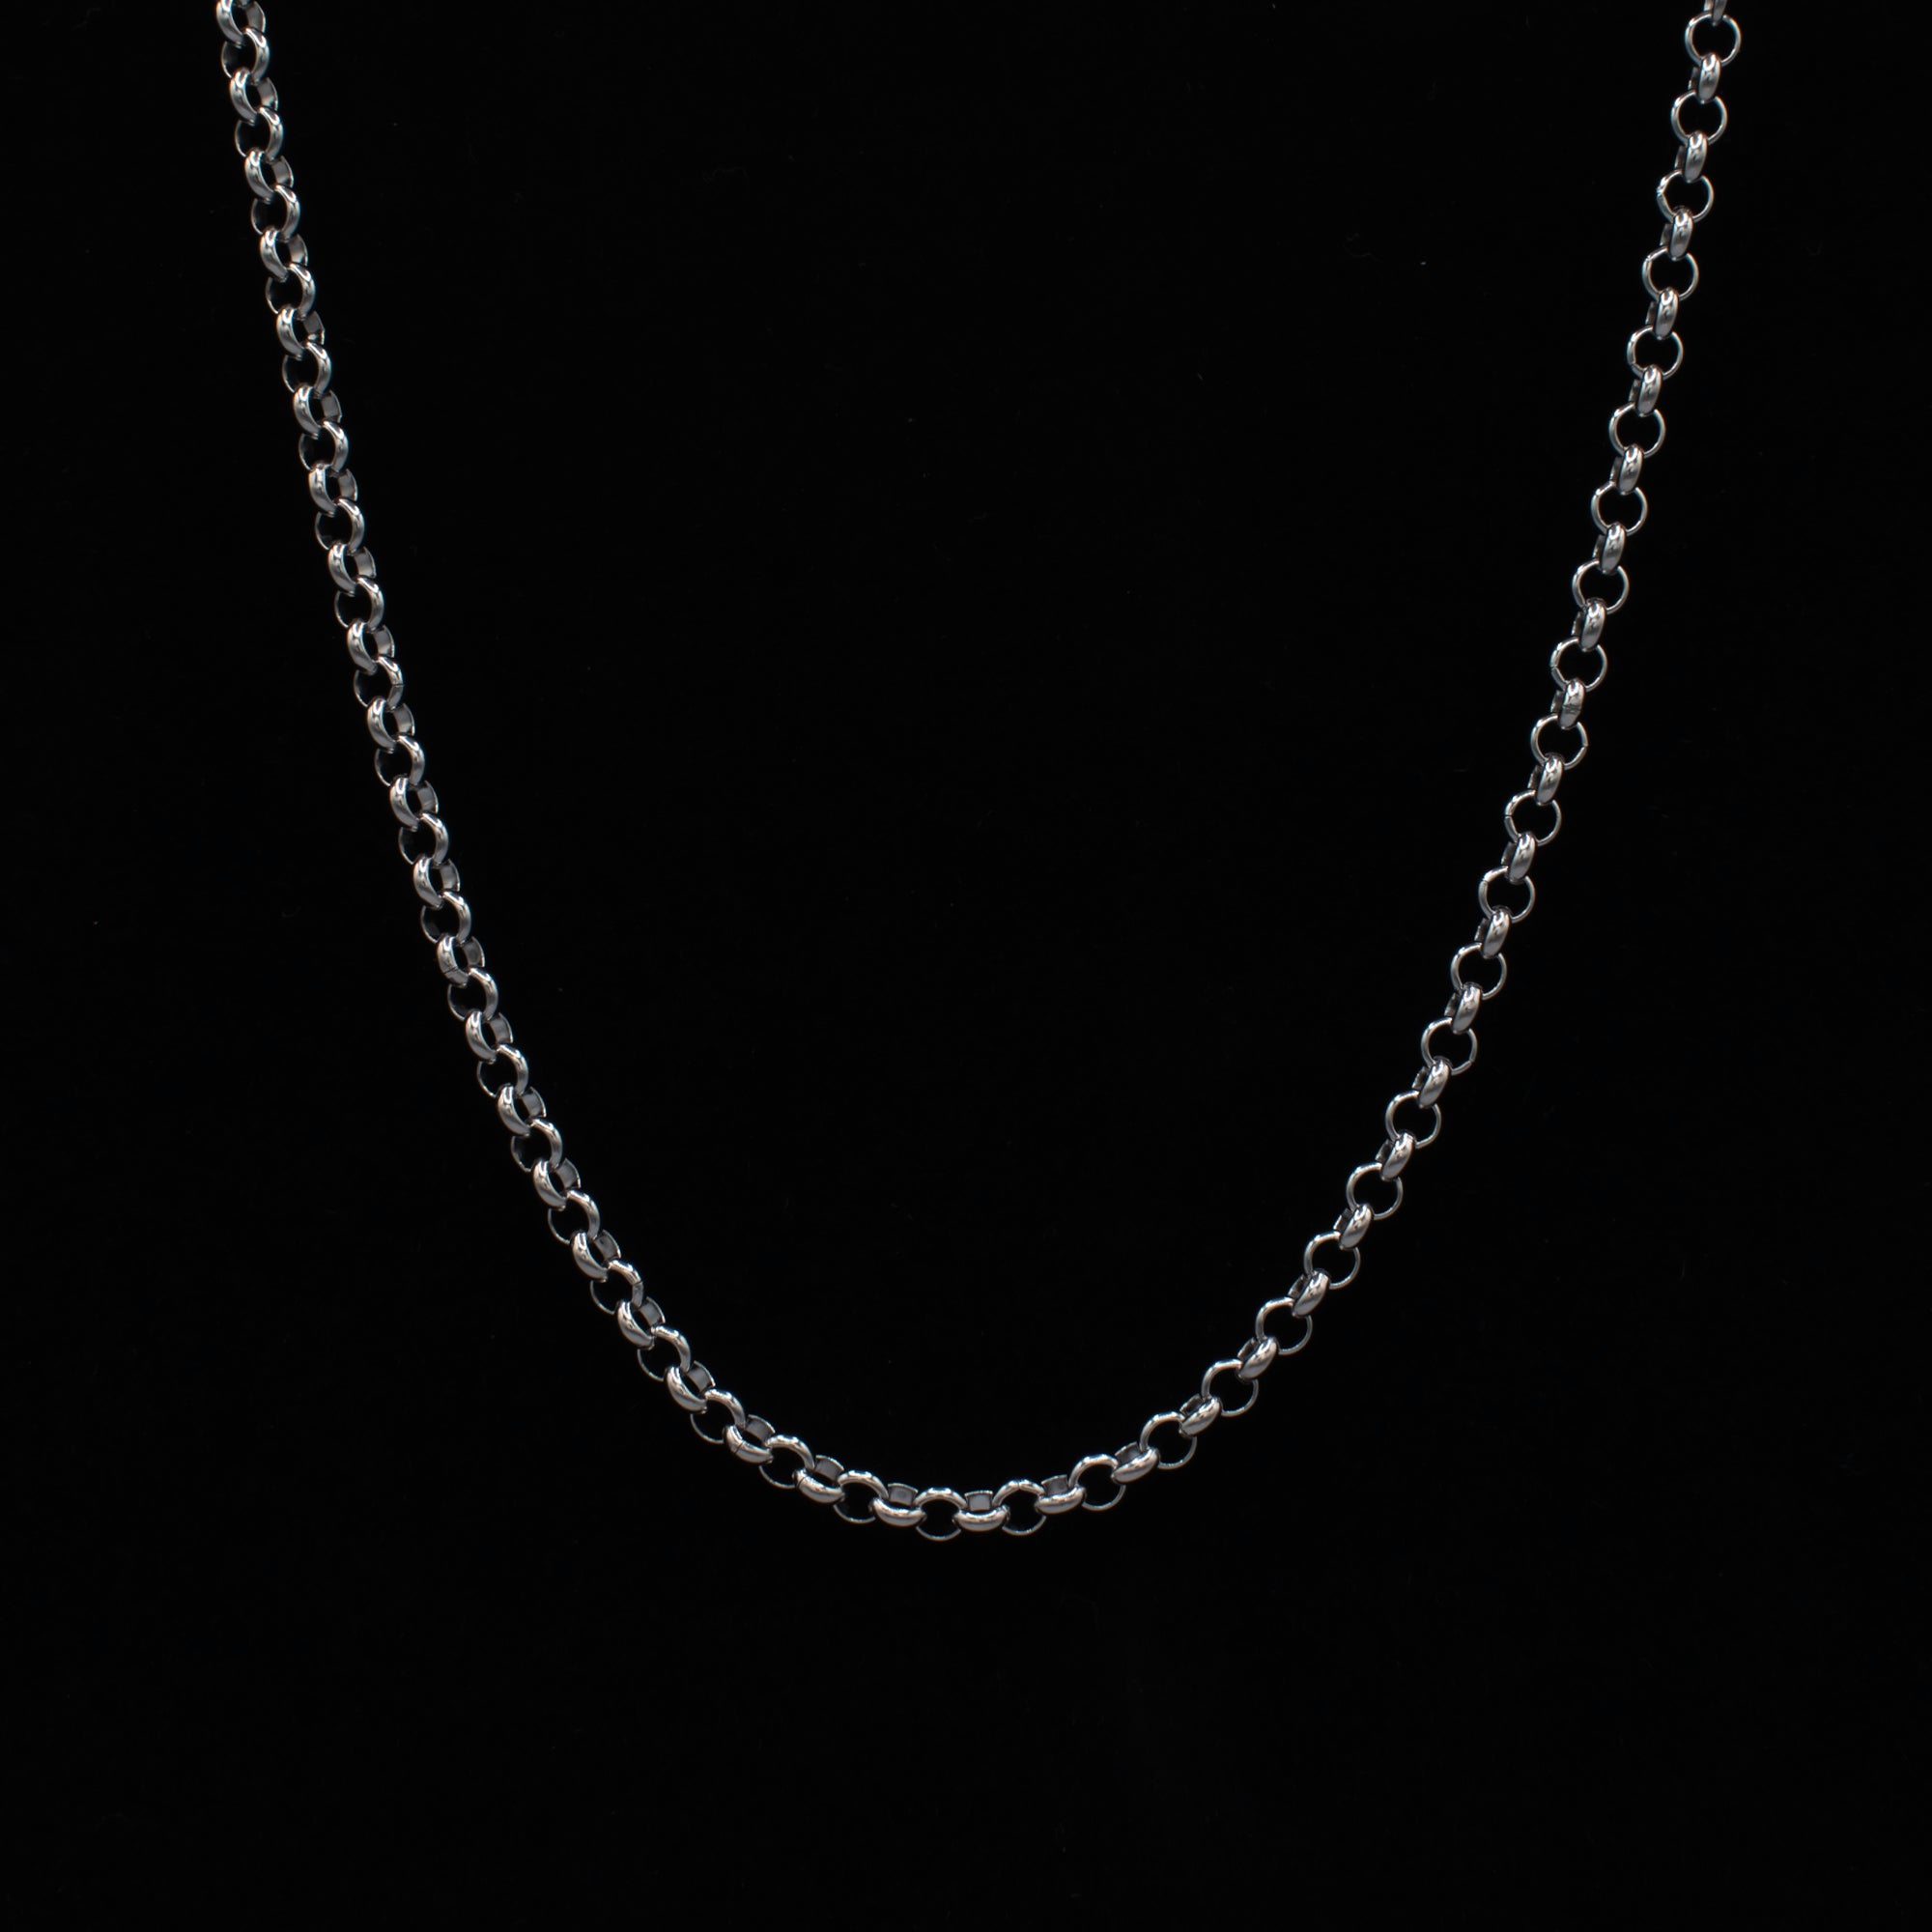 Belcher Necklace - (Silver) 4mm